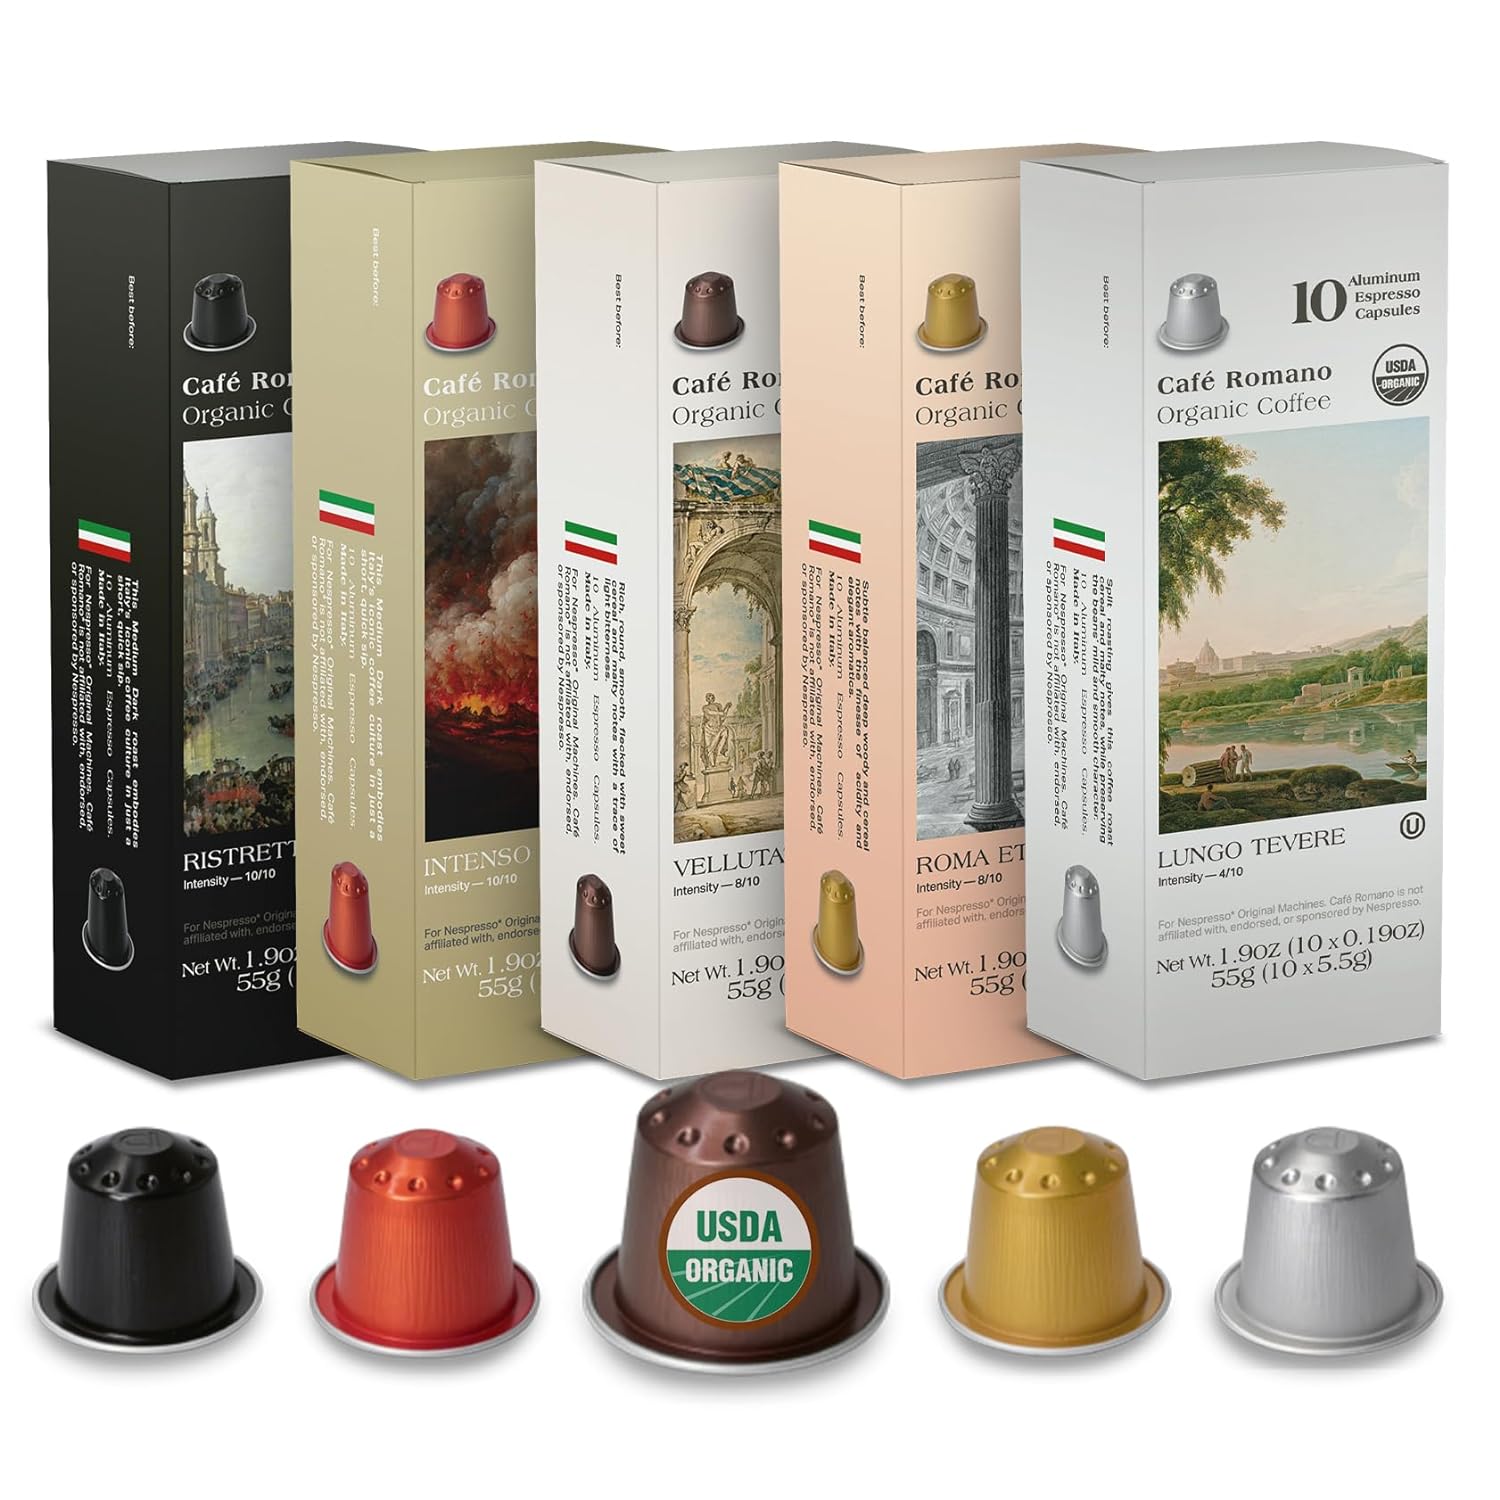 Organic USDA Caf Romano Coffee Aluminum Espresso Pods For Nespresso Origninal Machine 100 Pack Italian Espresso Coffee 100% Arabica (Variety pack)